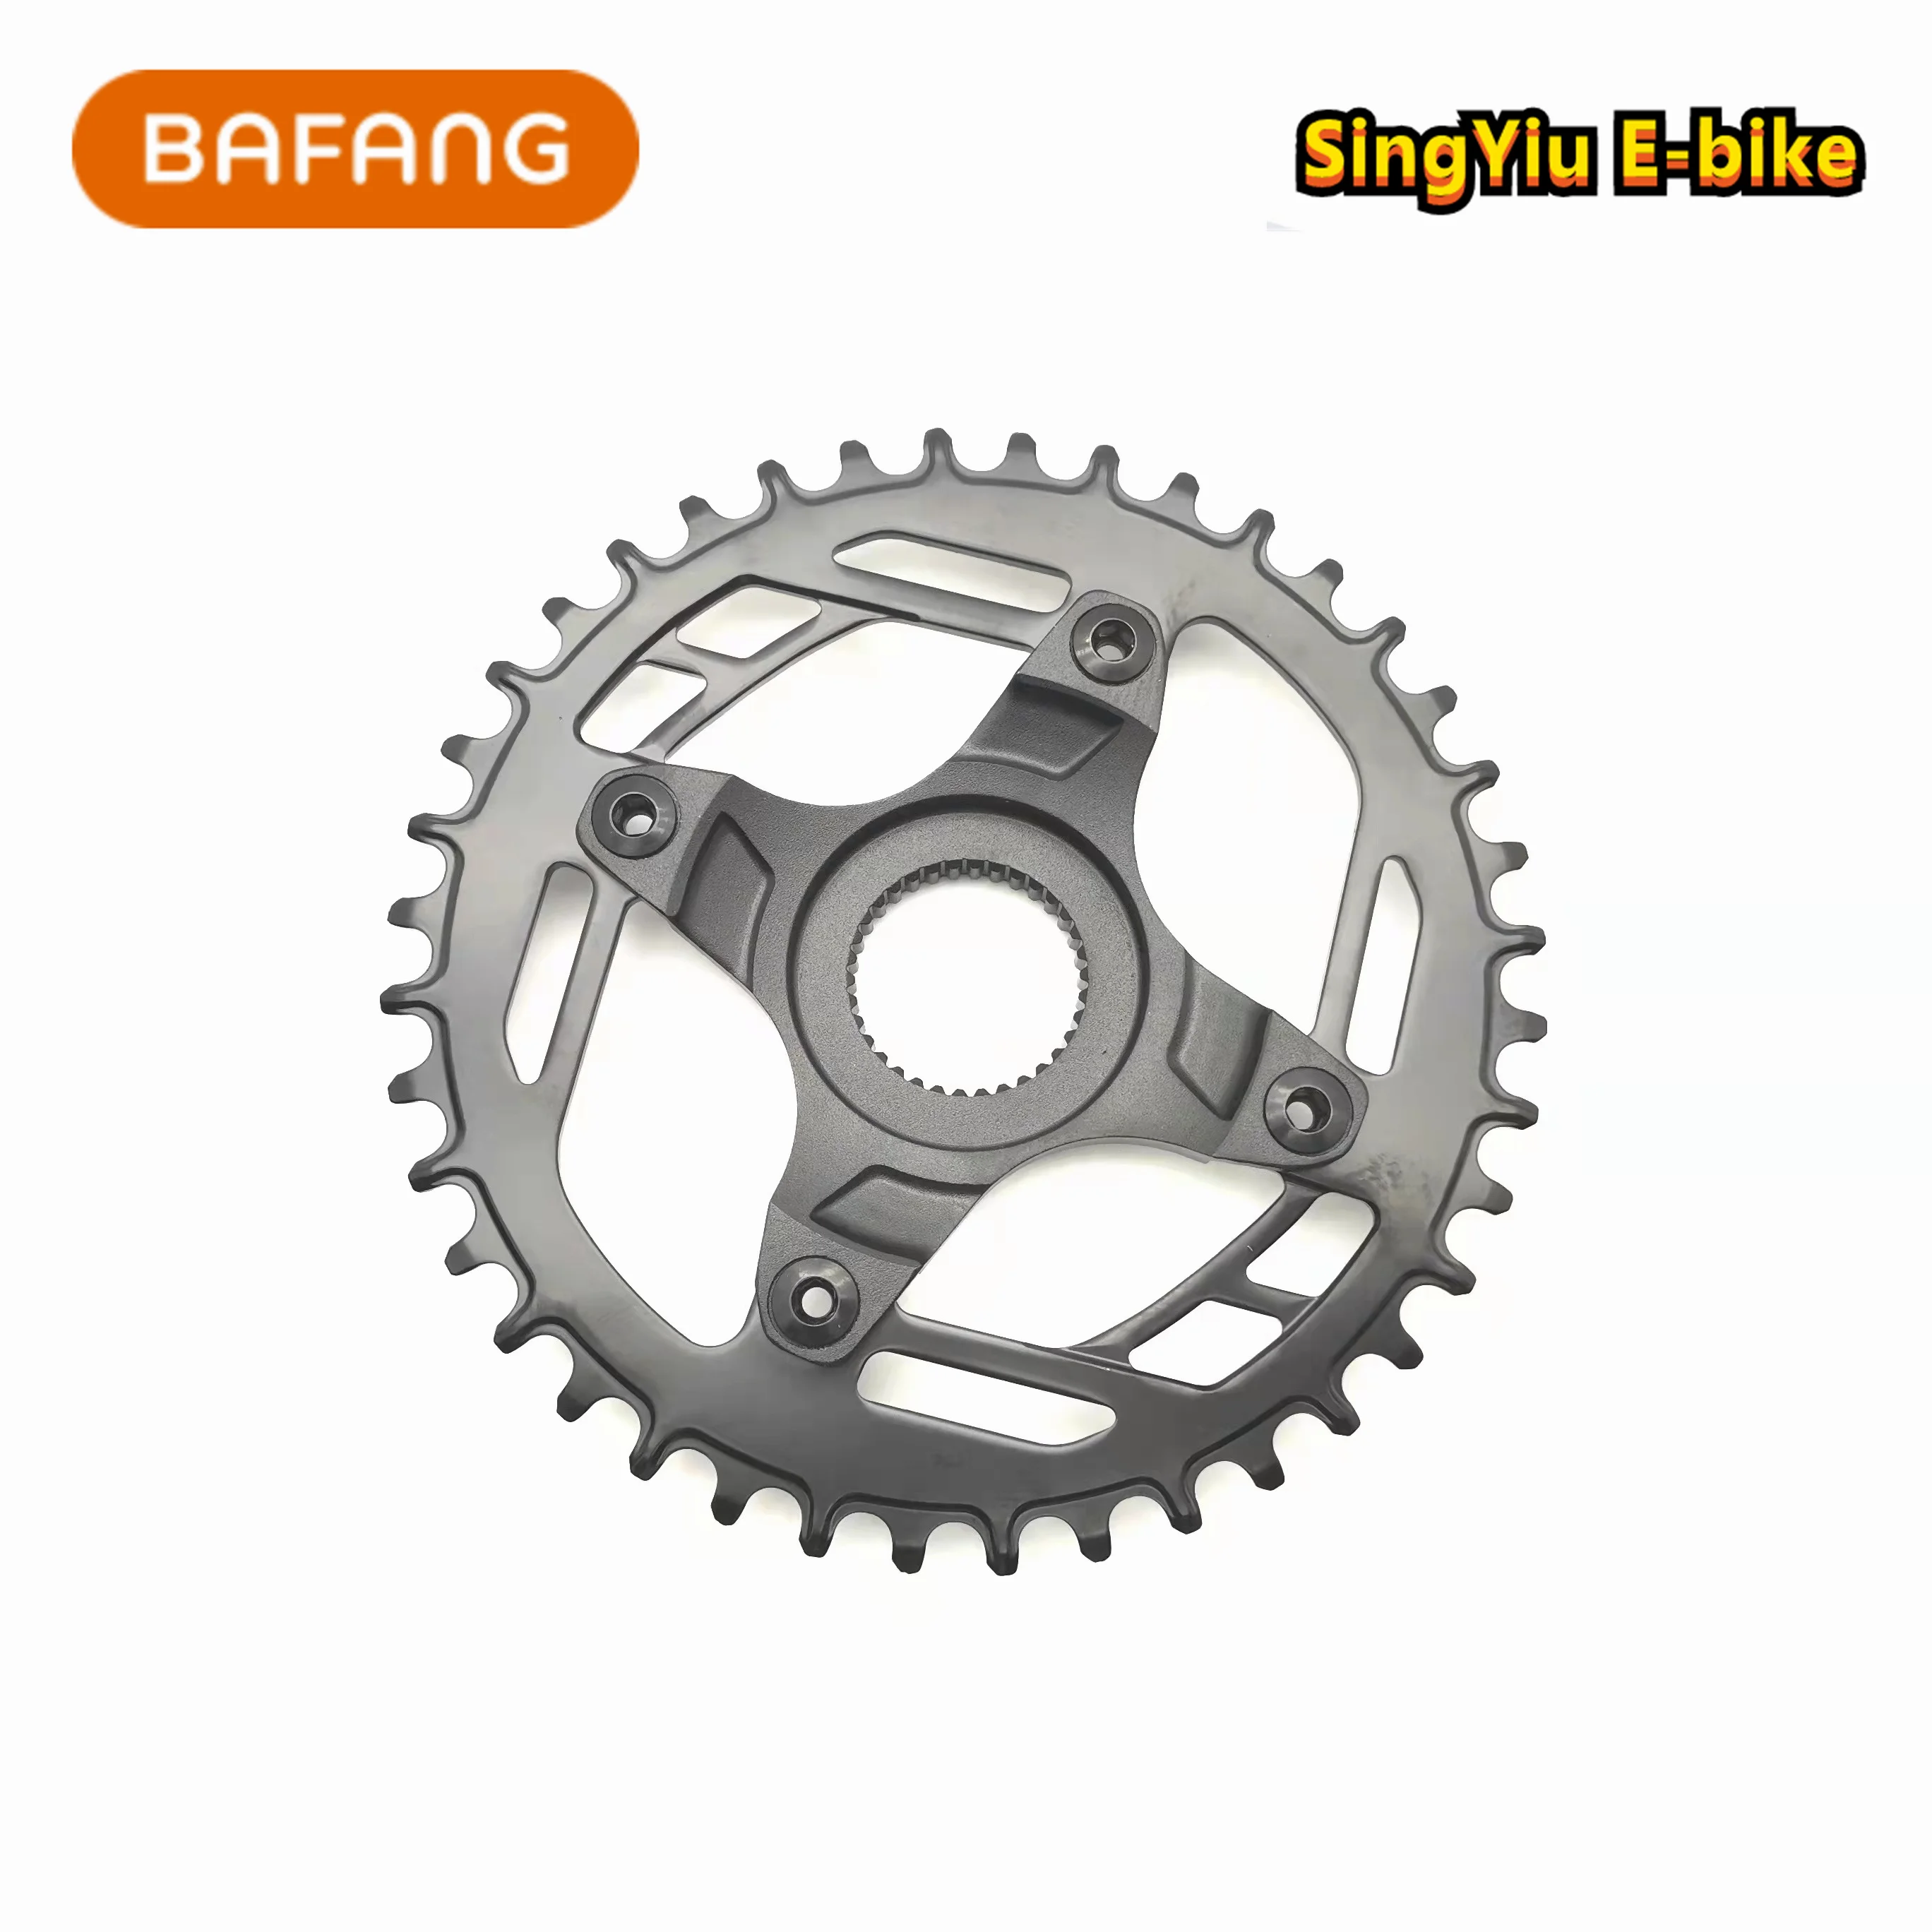 

Bafang 8FUN Chain wheel Chainring Bafang M500/M600 Torque Motor 32T 34T 36T 38T 40T